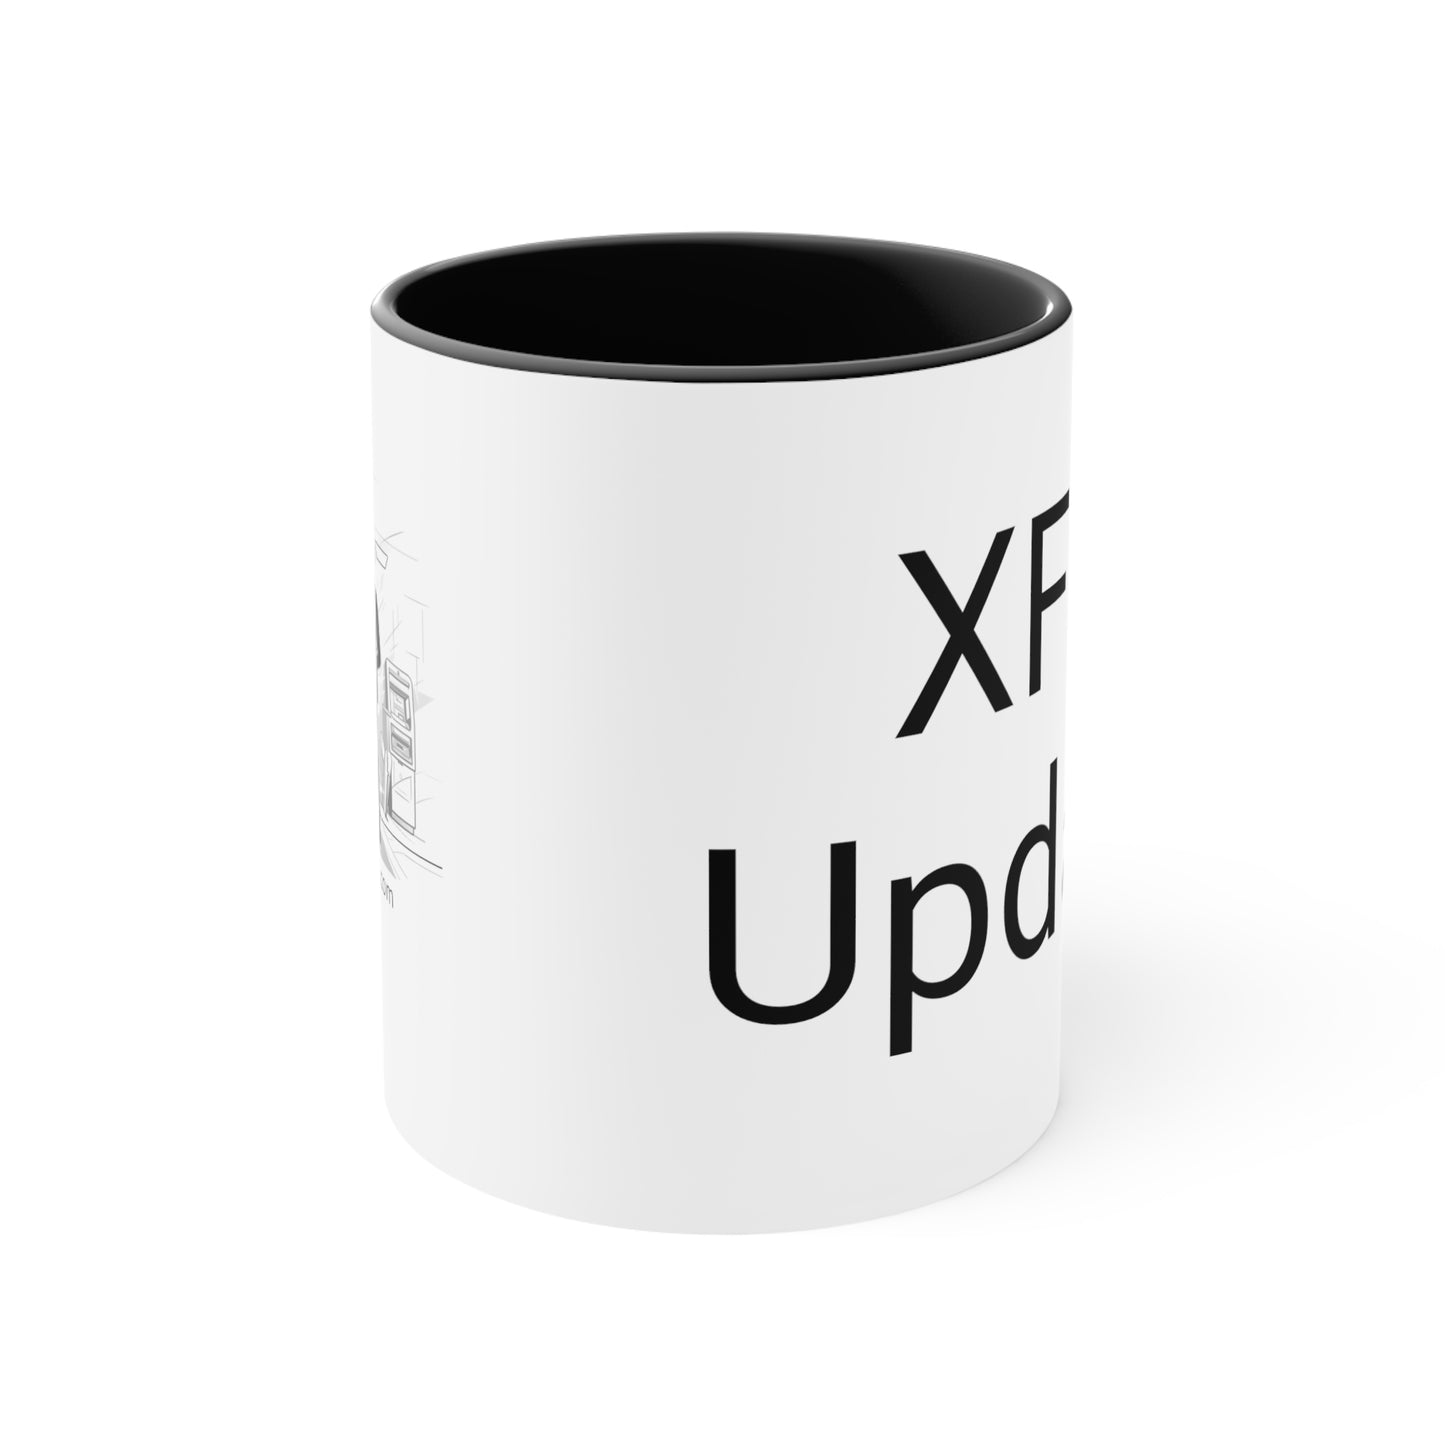 XFS Updates - the Mug